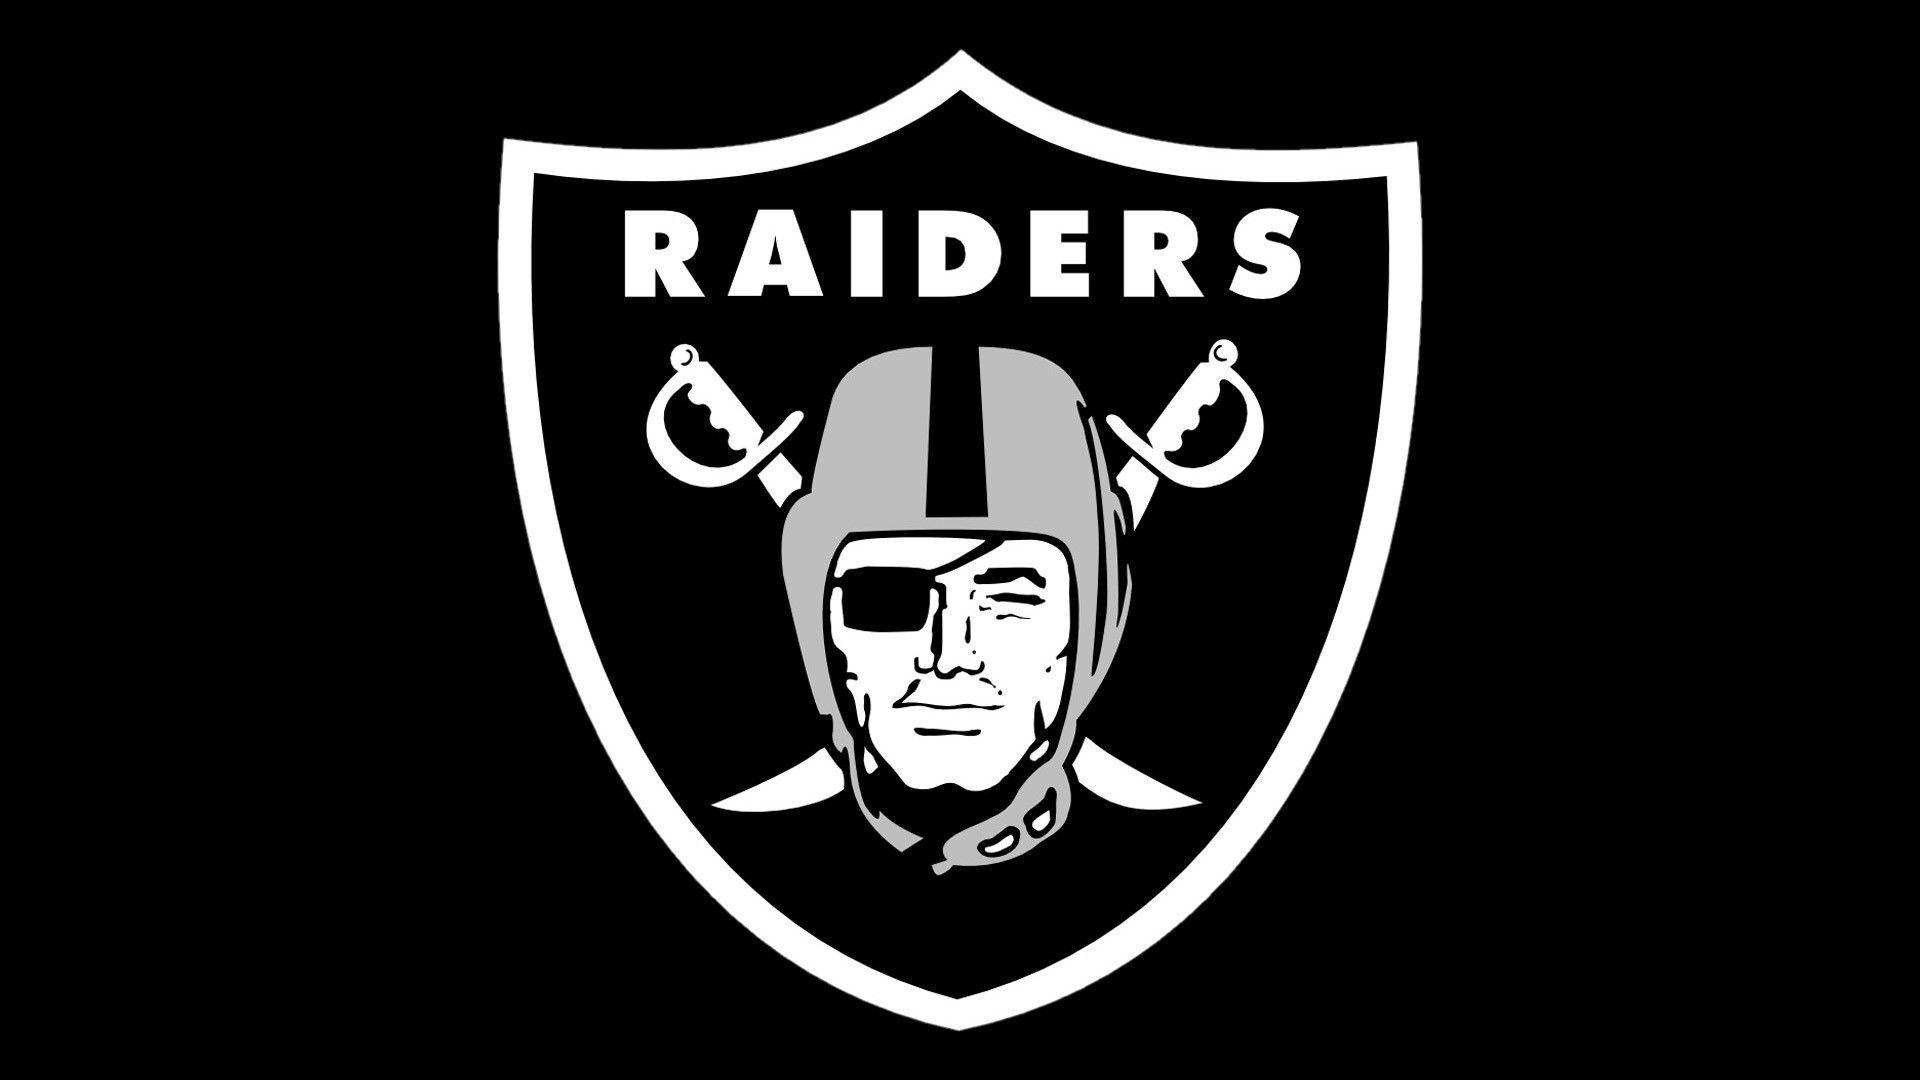 Oakland Raiders Logo Wallpaper background picture